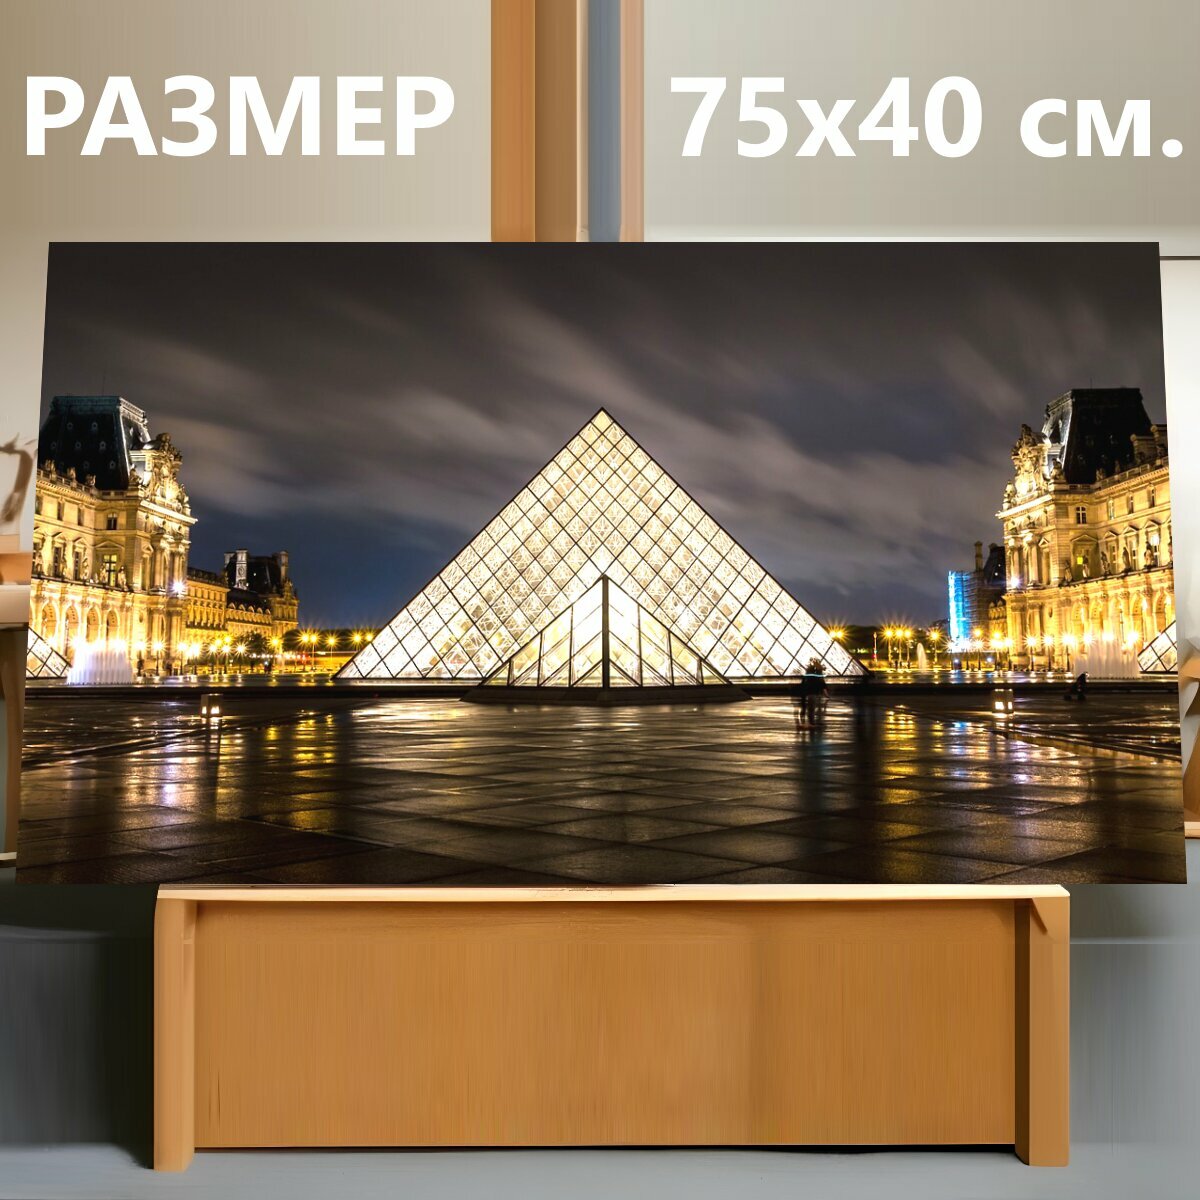 Картина на холсте "Лувр, париж, франция" на подрамнике 75х40 см. для интерьера